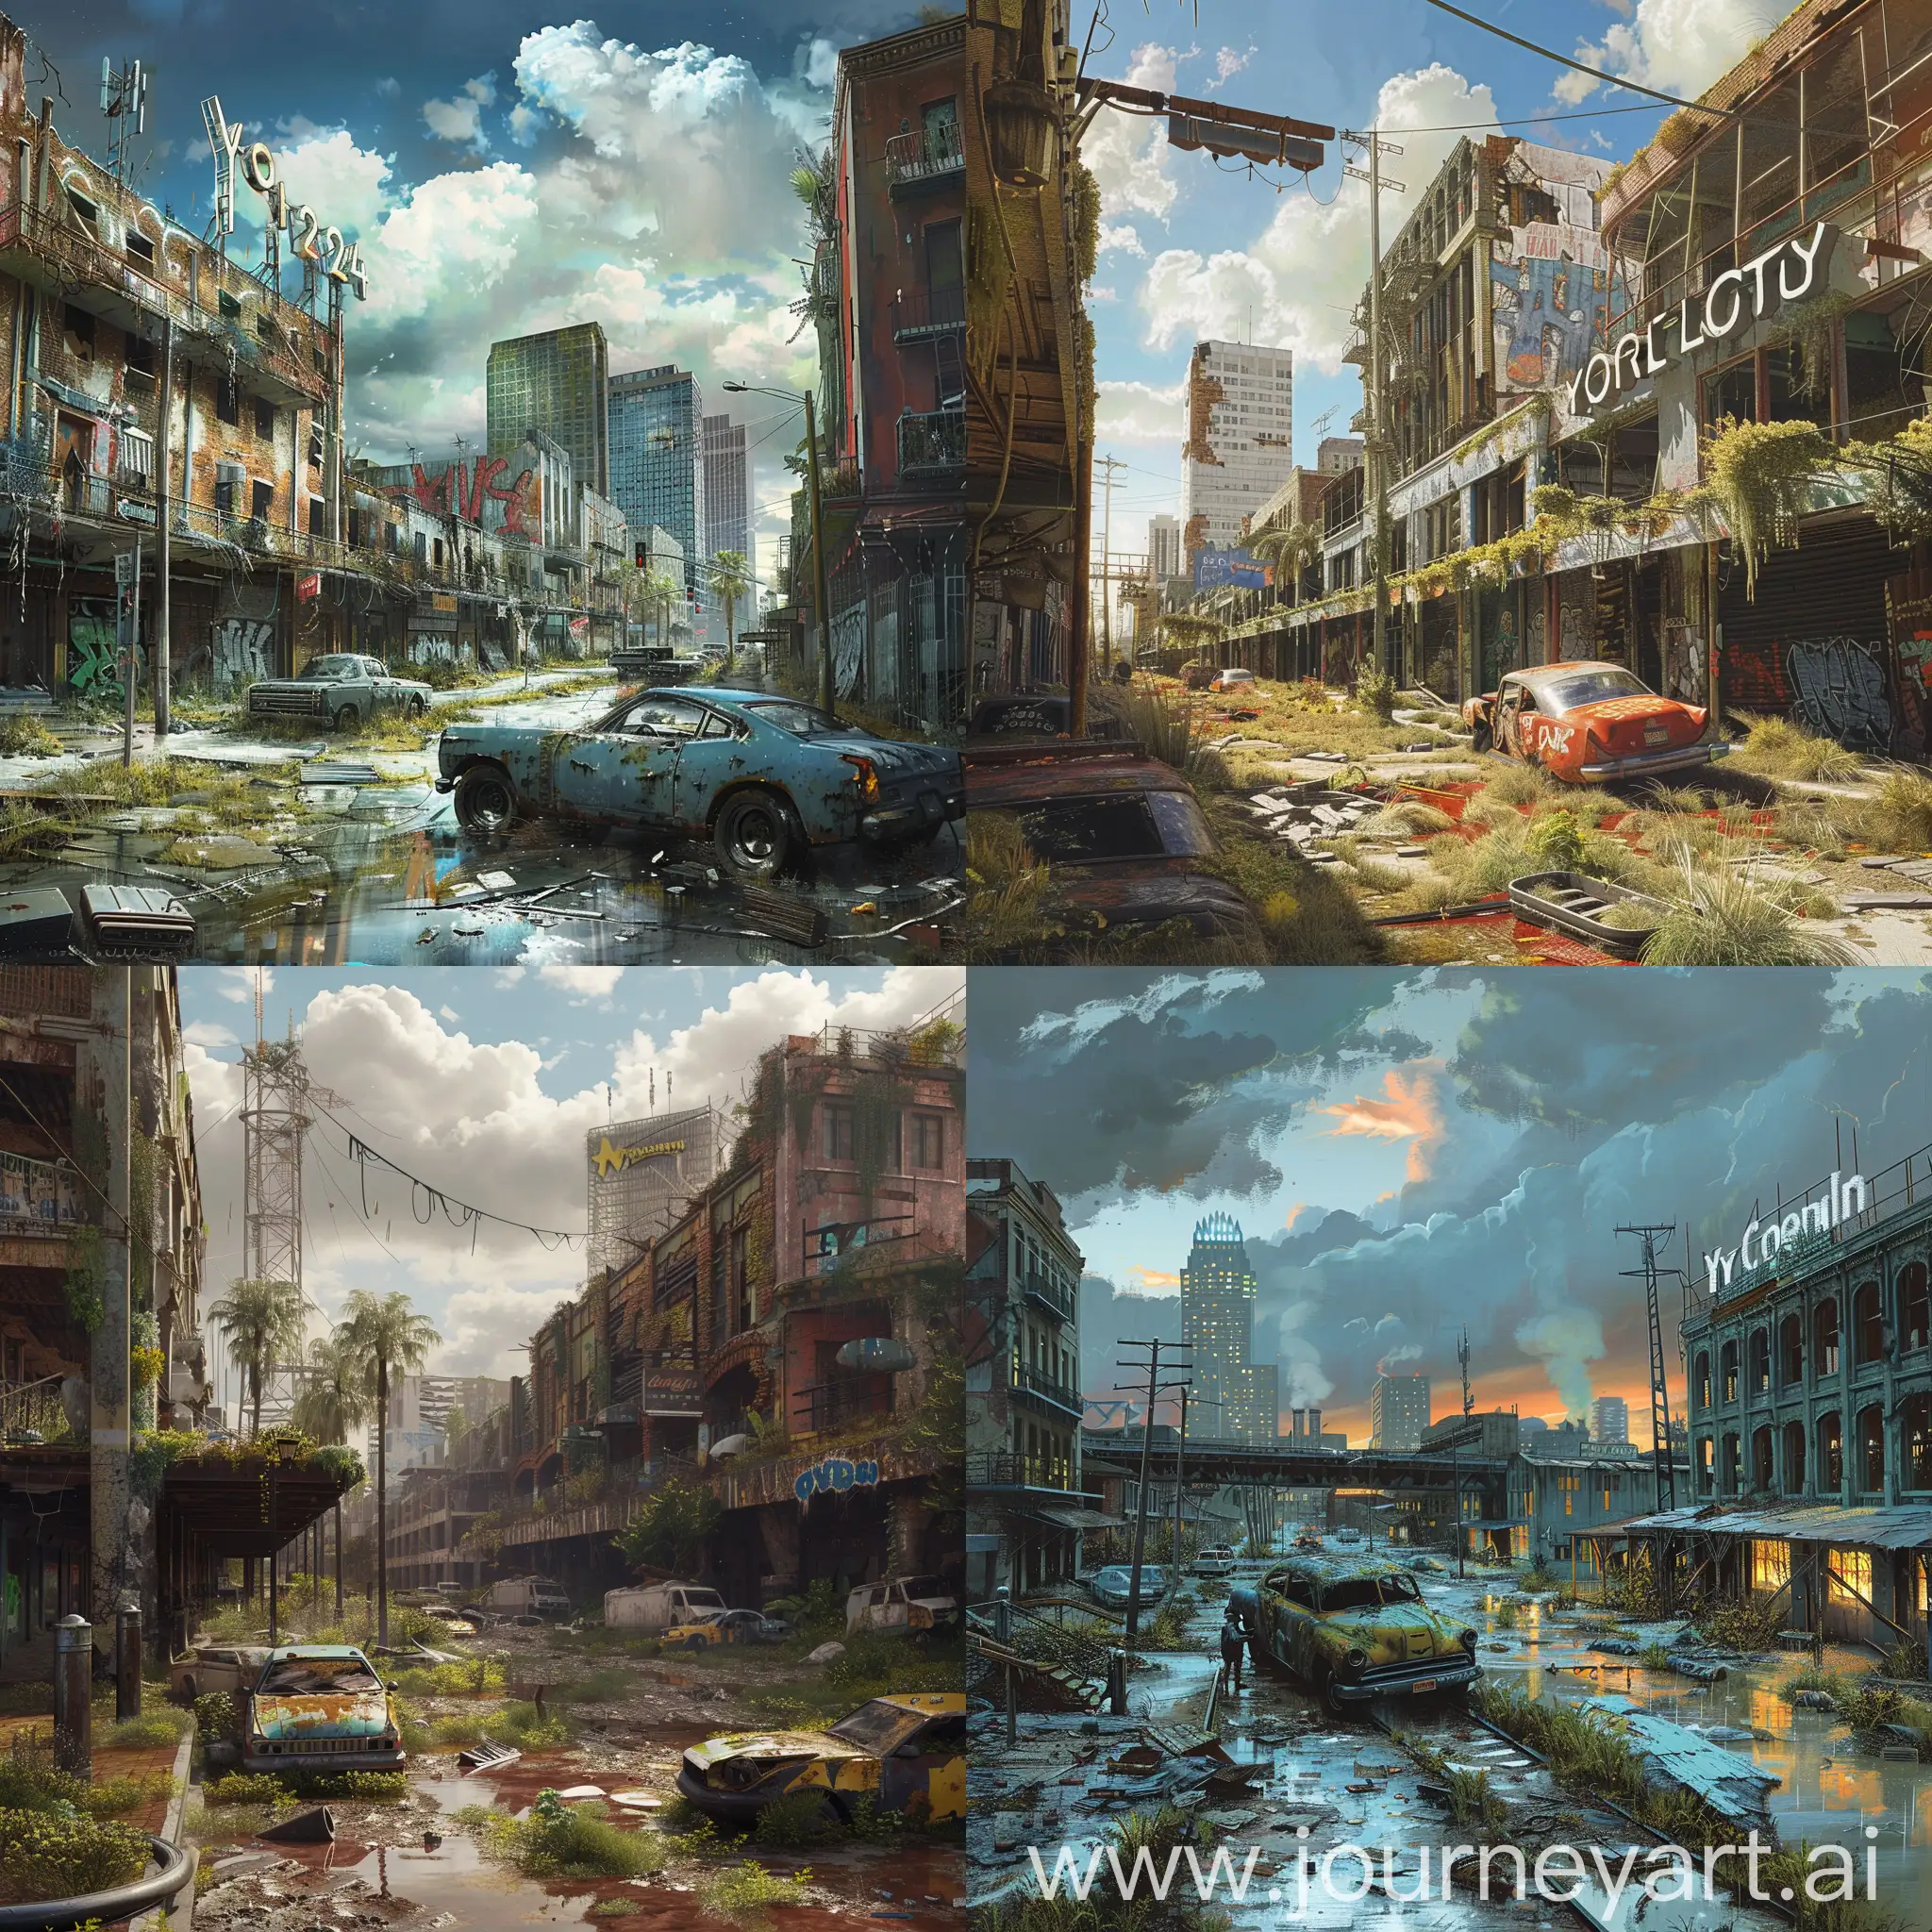 Masterpiece, artistic, post-apocalyptic Ybor City in 2024